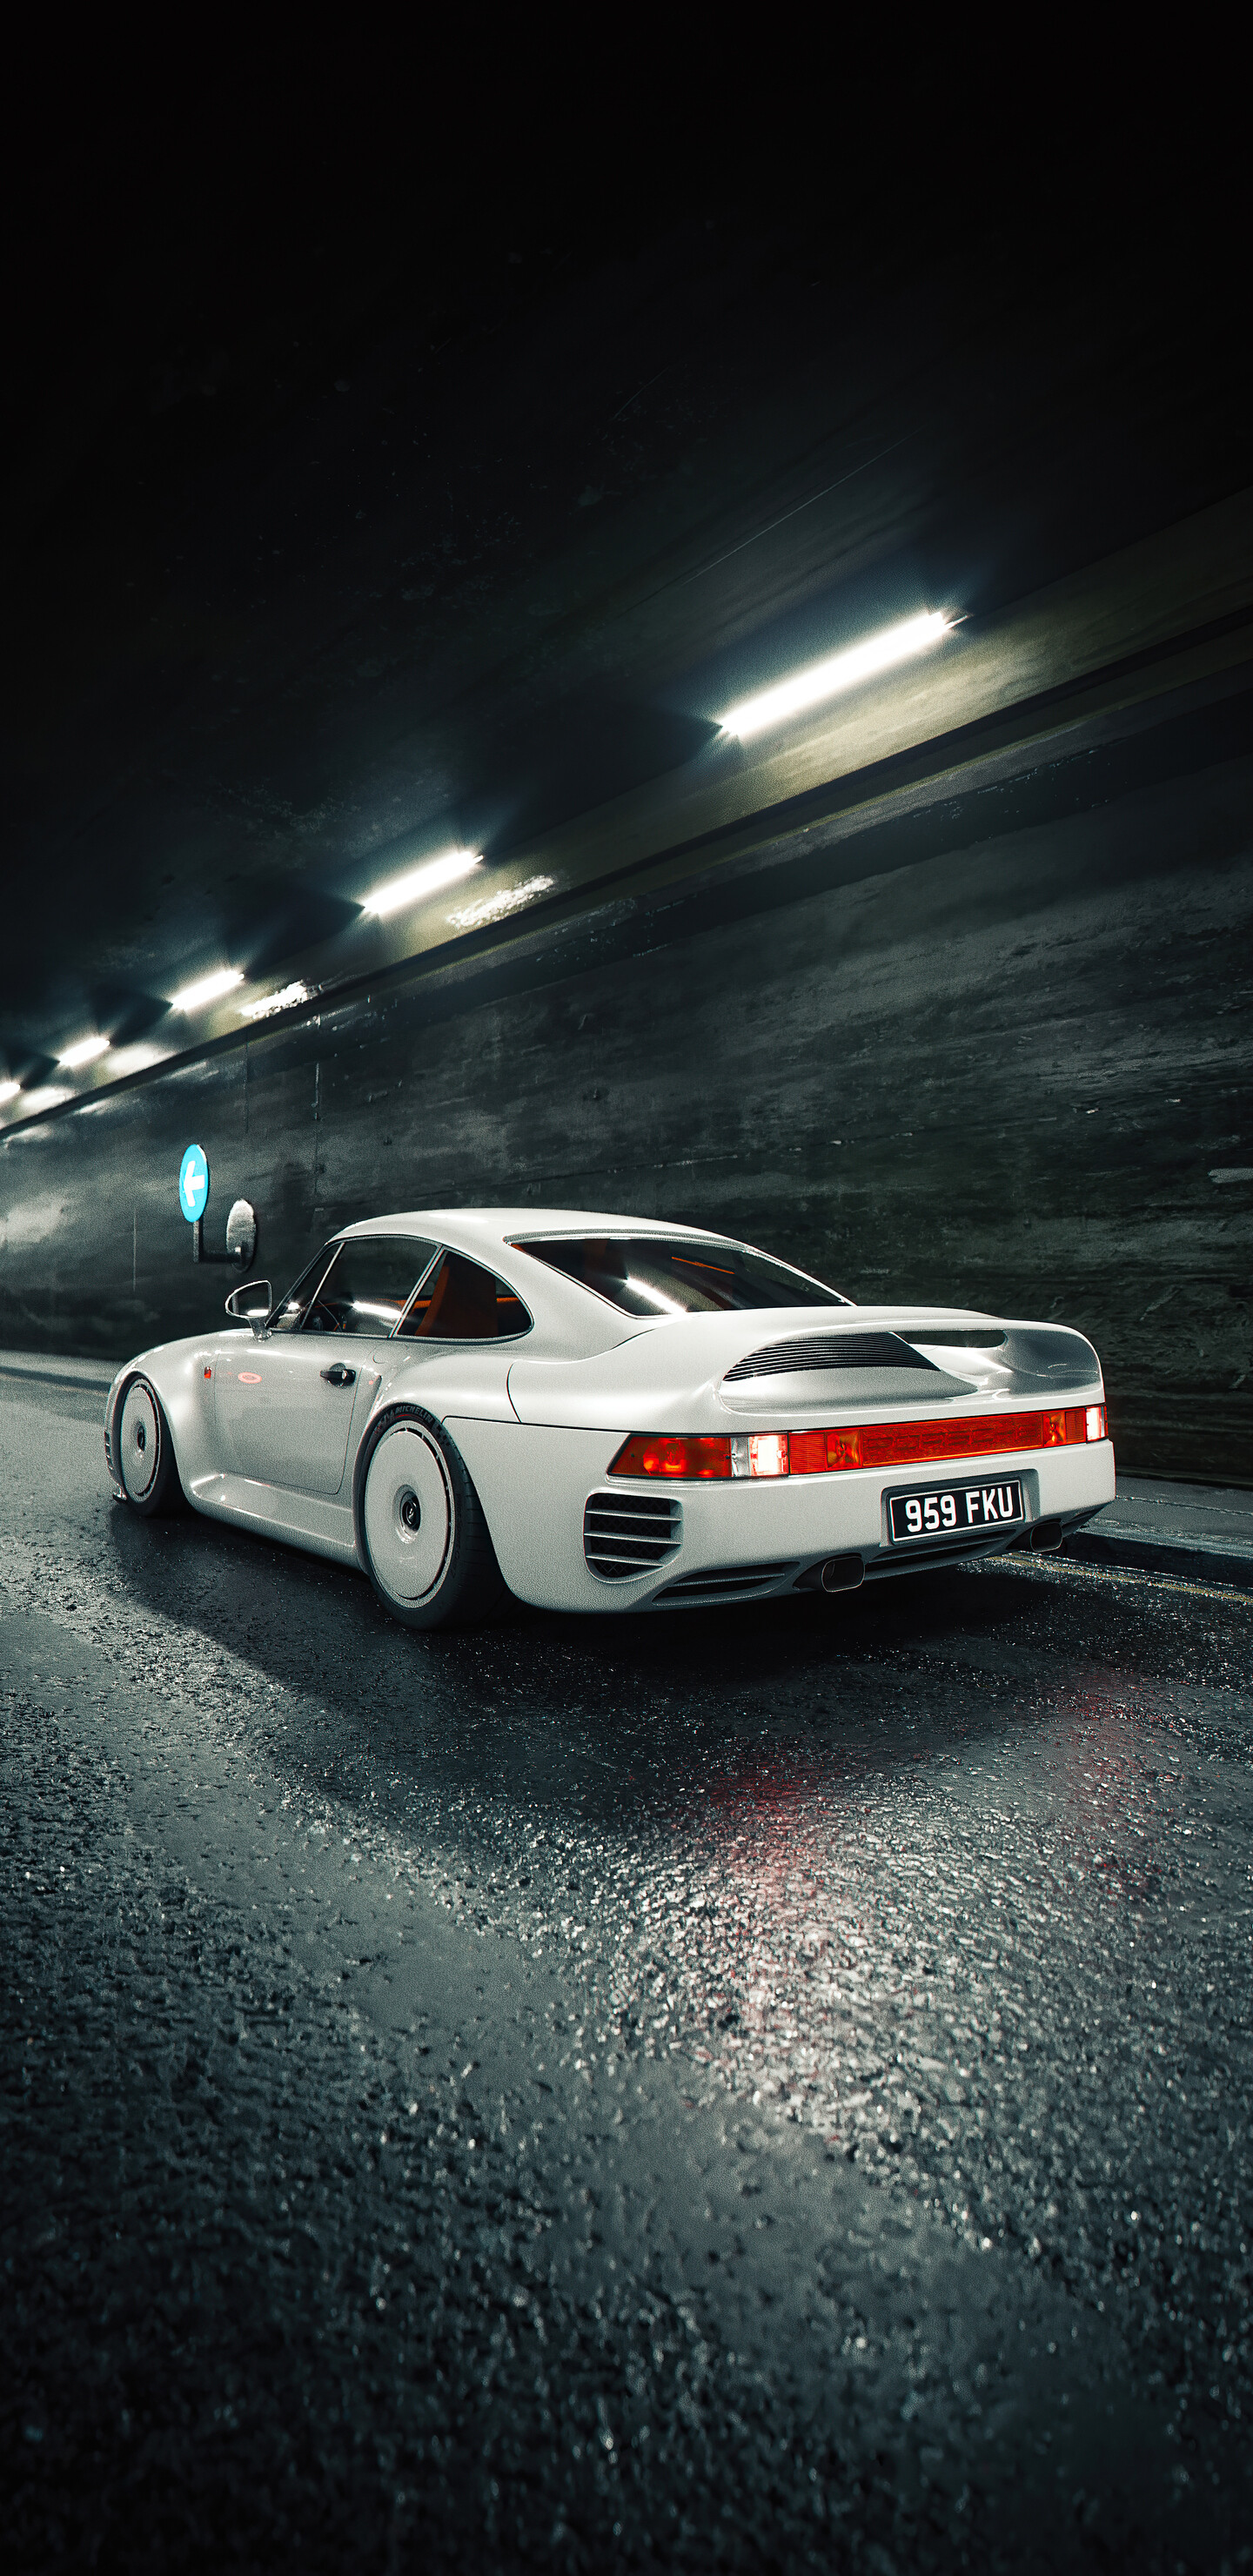 Porsche: 959 GRB Prototype, German car manufacturer. 1440x2960 HD Background.